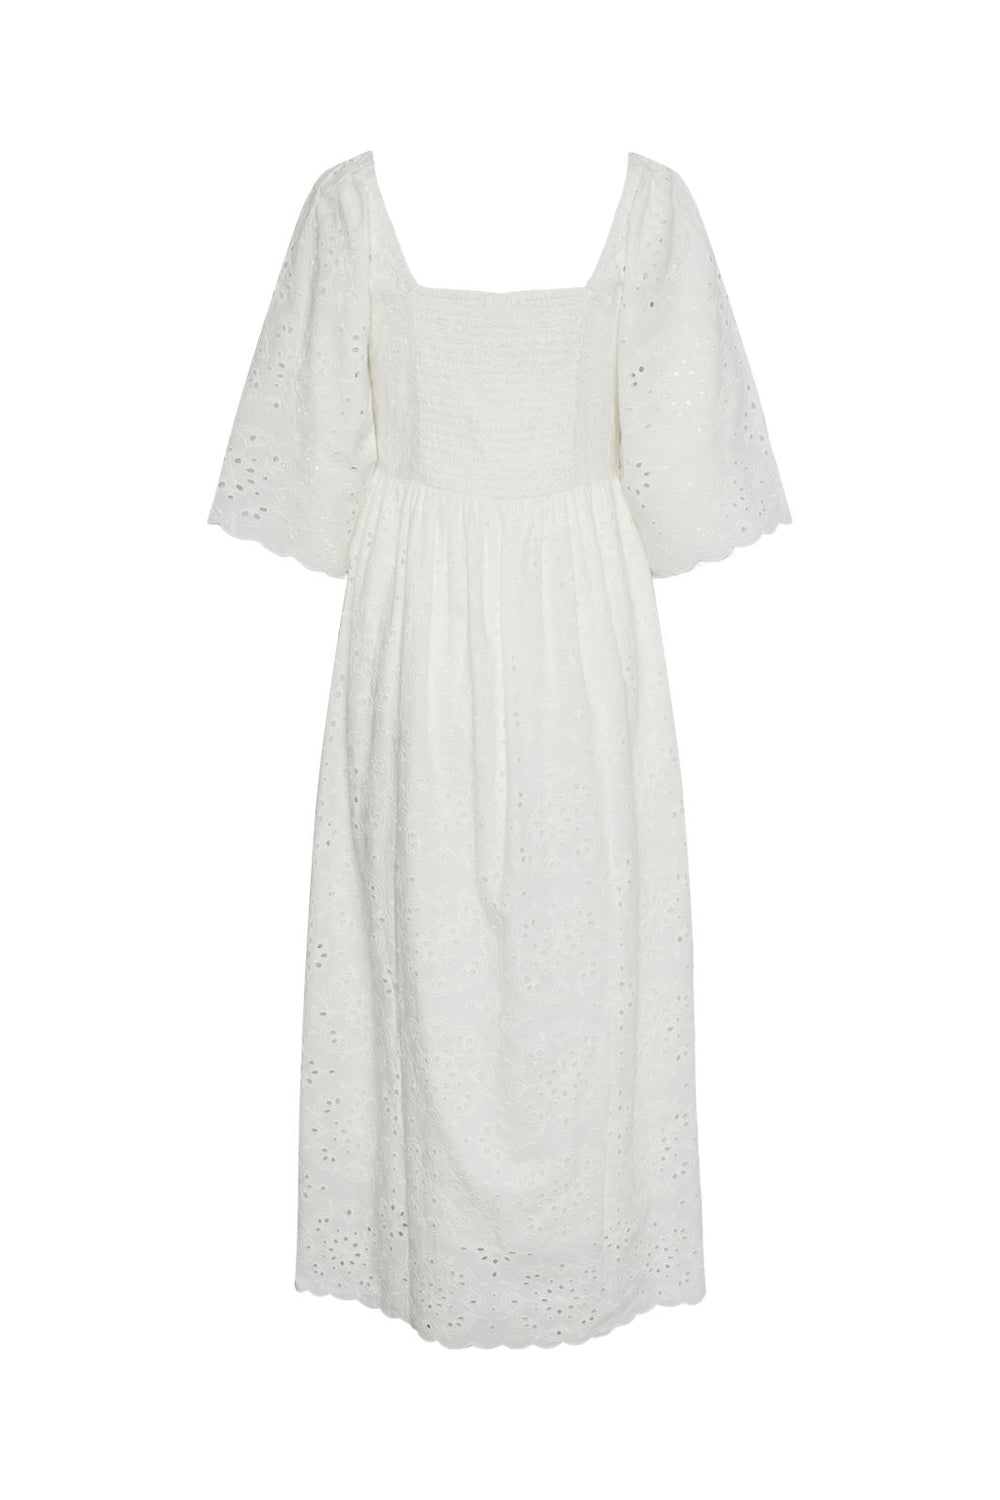 Y.A.S - Yassunra 3/4 Long Dress - 4533176 Star White